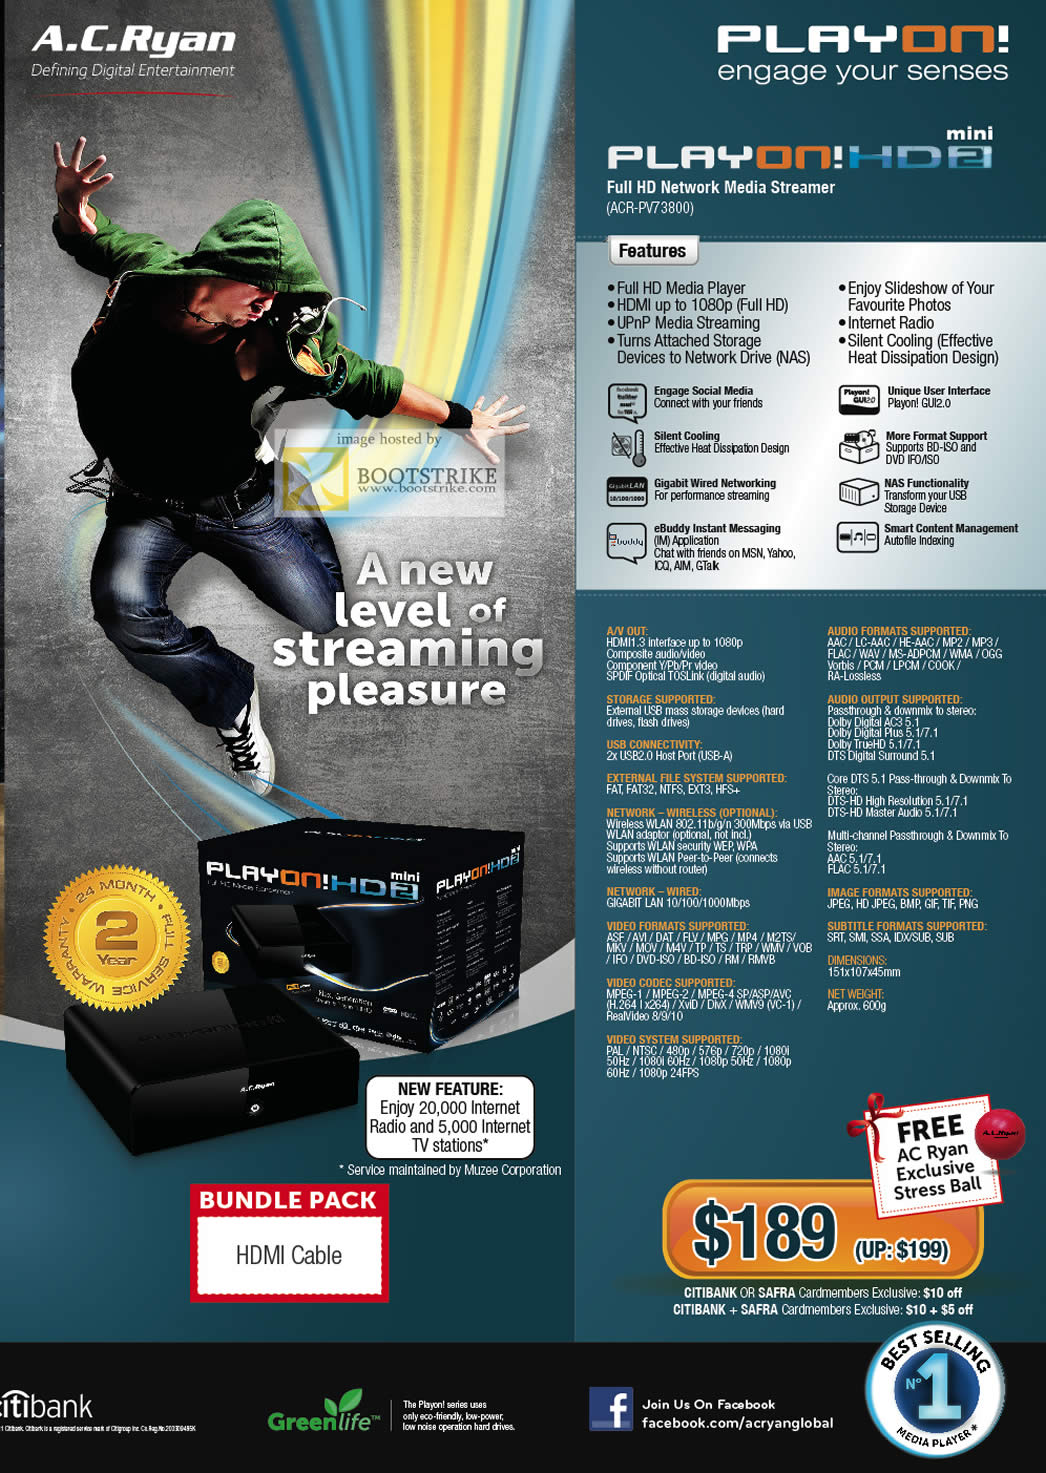 PC Show 2011 price list image brochure of A.C. Ryan Play On! HD2 Mini ACR-PV73800 Media Player